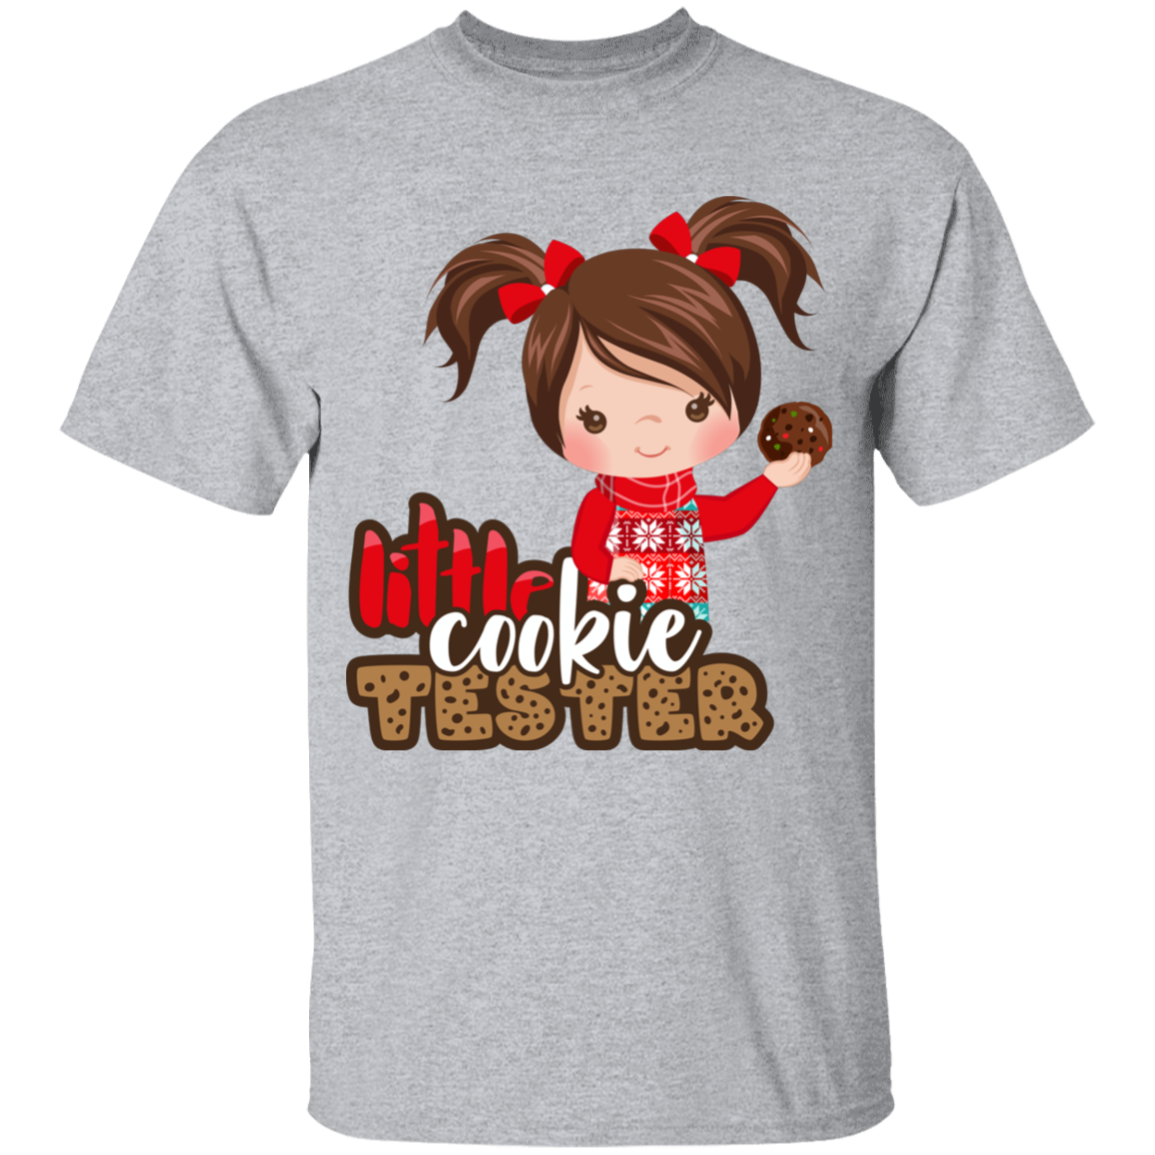 Little Cookie Tester Brown Hair Girl 100% Cotton T-Shirt